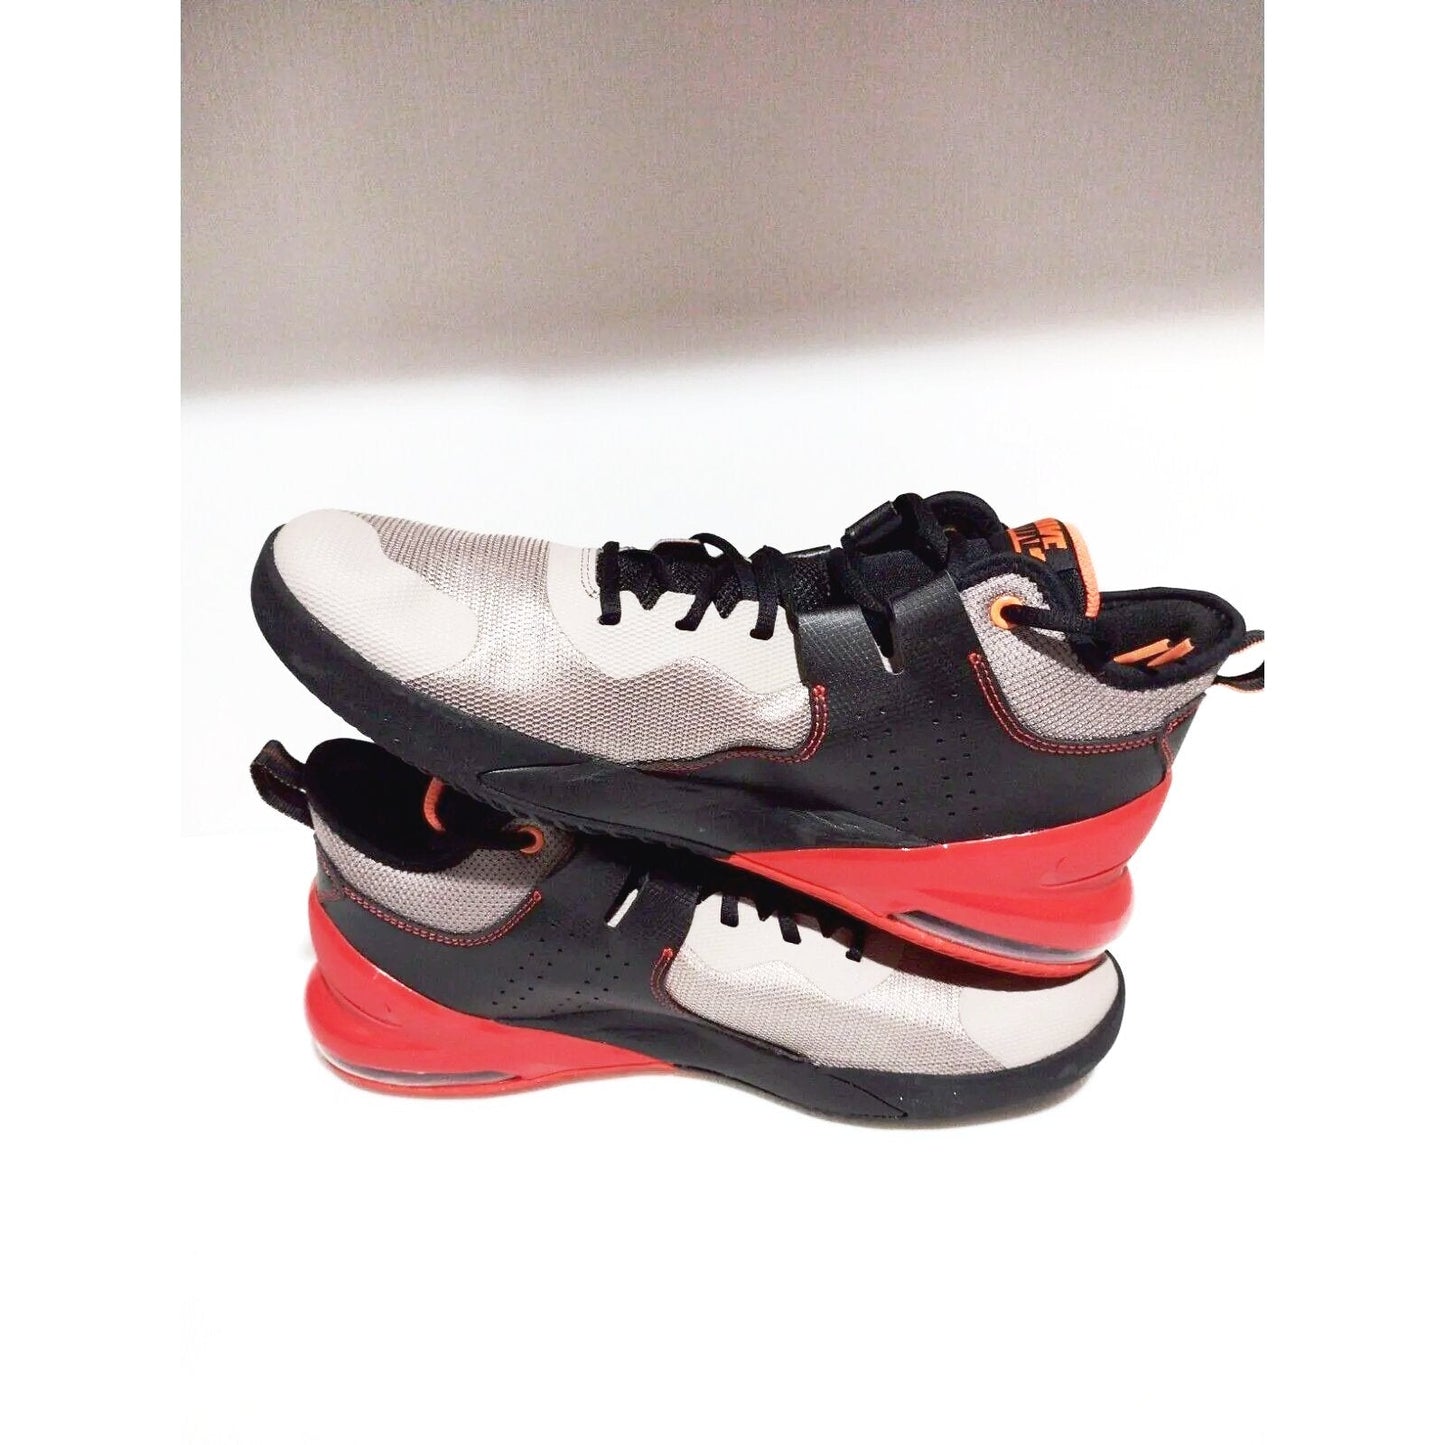 Nike air max impact basketball shoes size 11.5 us men - Classic Fashion Deals